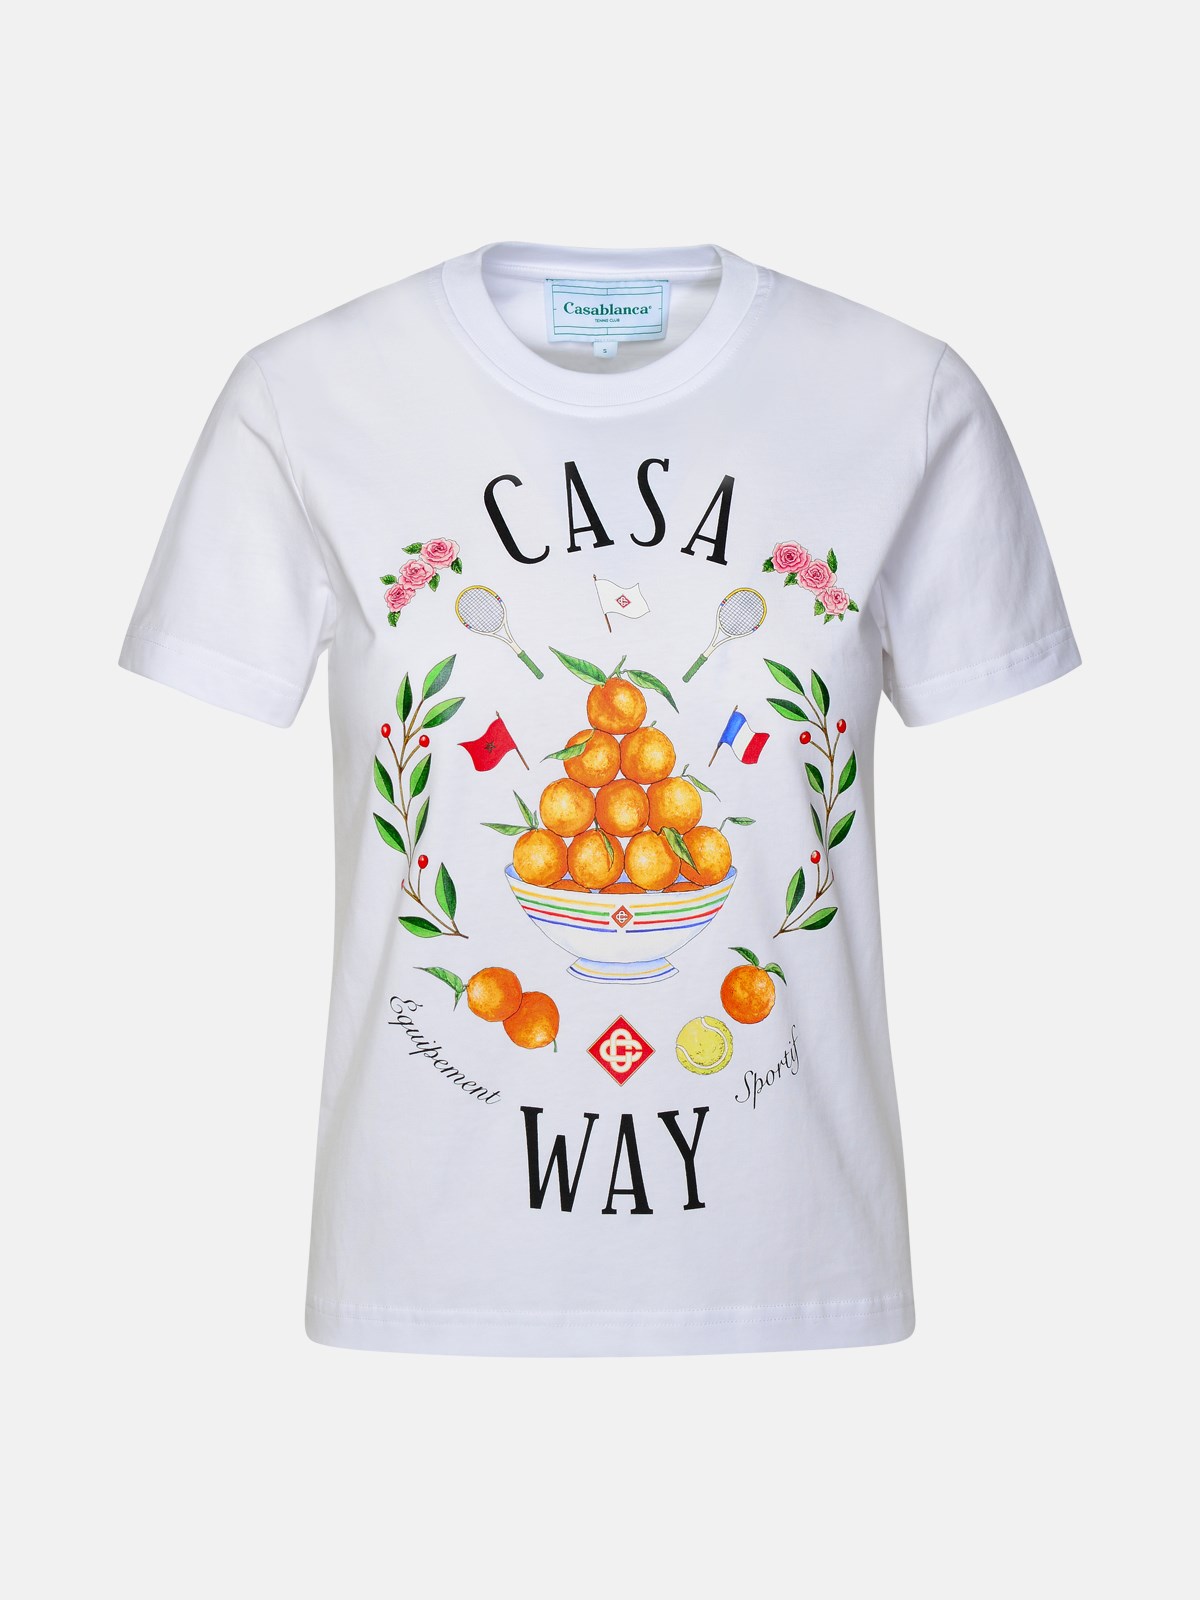 Casablanca 'casa Way' White Organic Cotton T-shirt